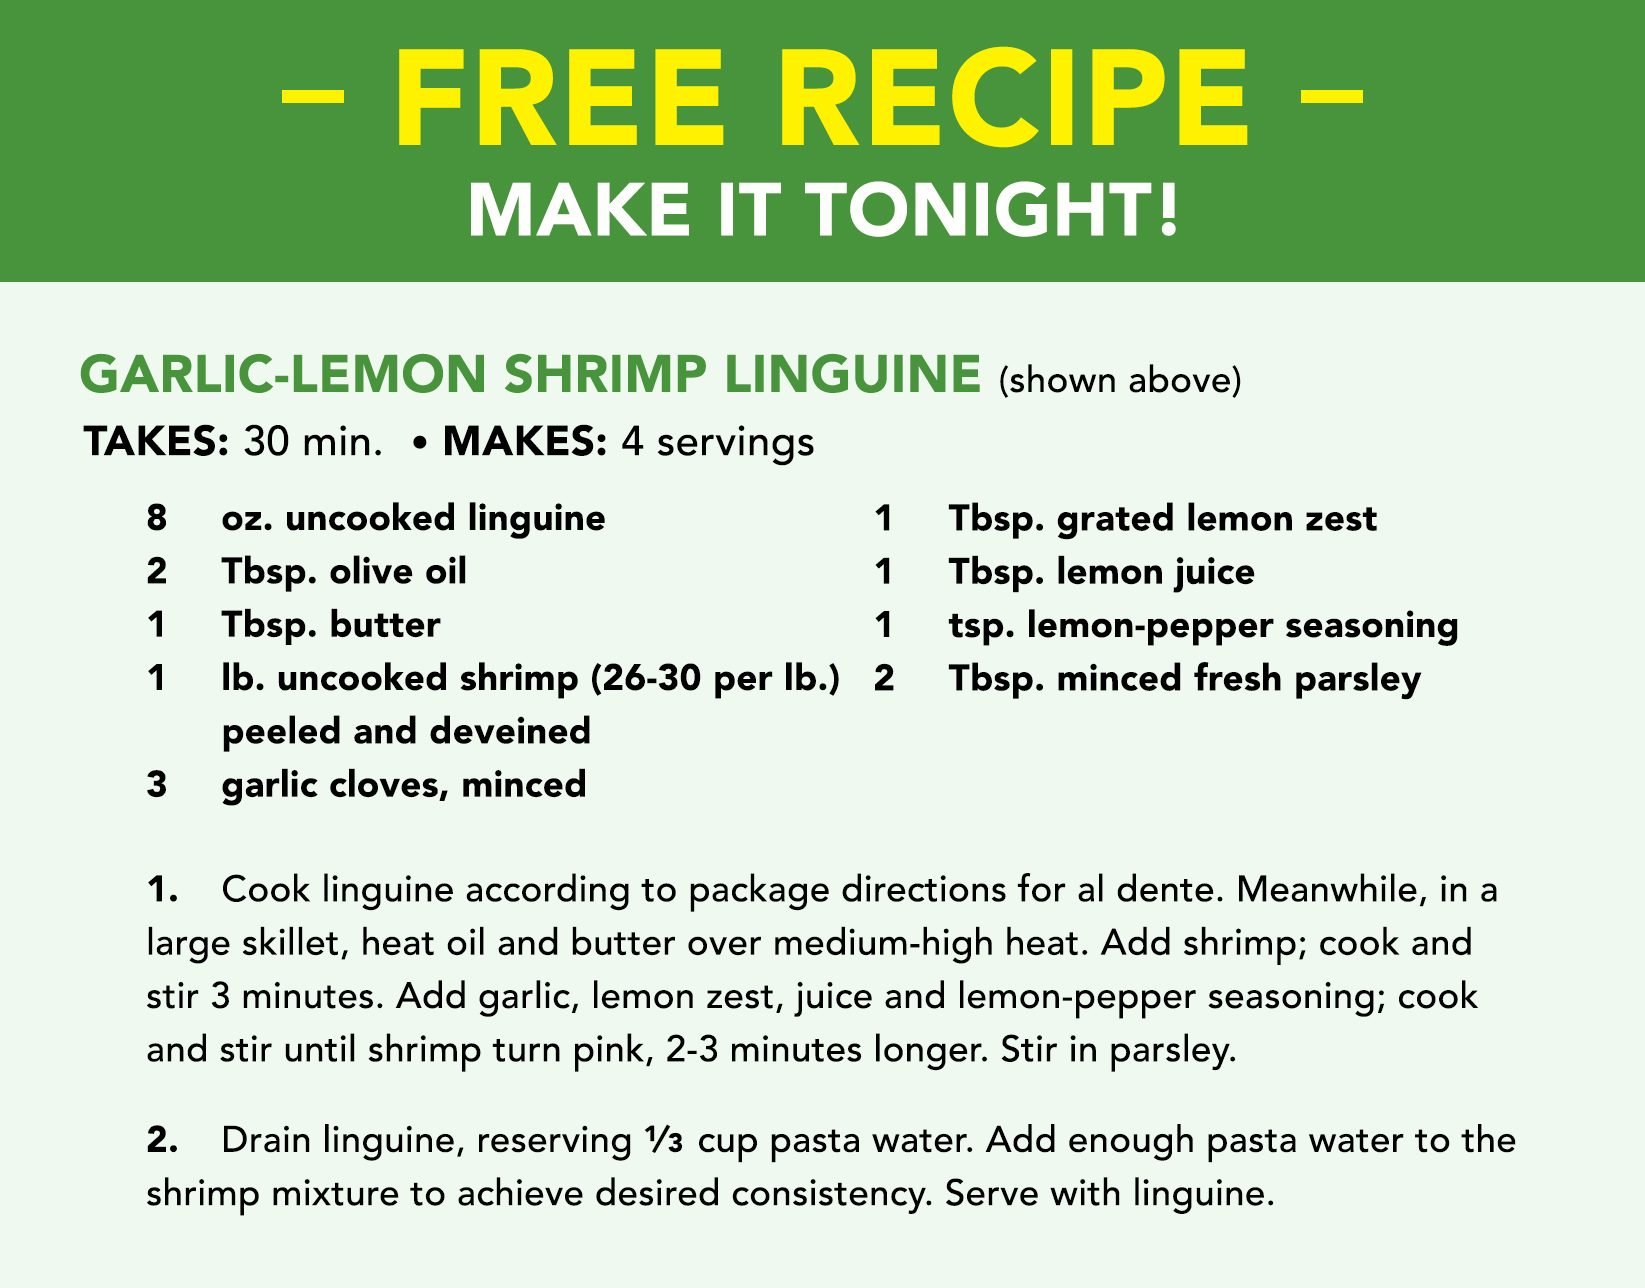 Free Recipe - Make It Tonight!